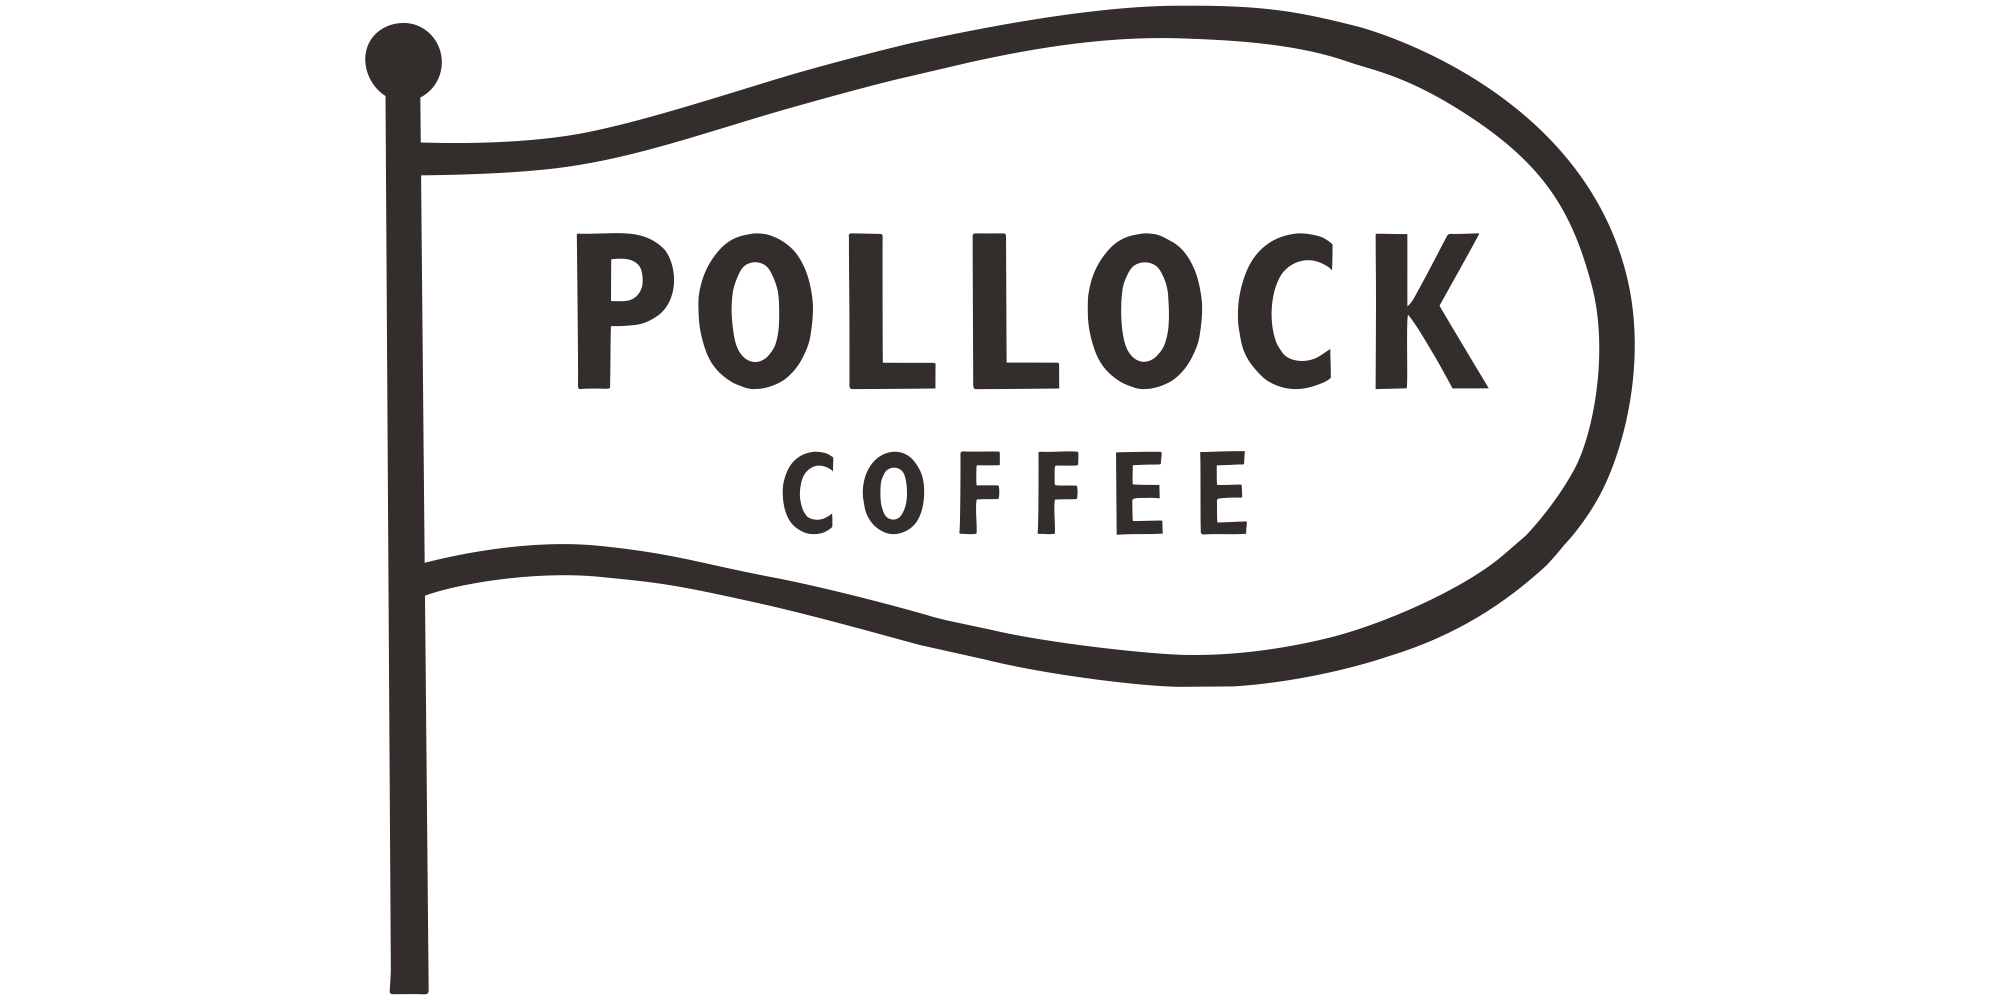 POLLOCK COFFEE